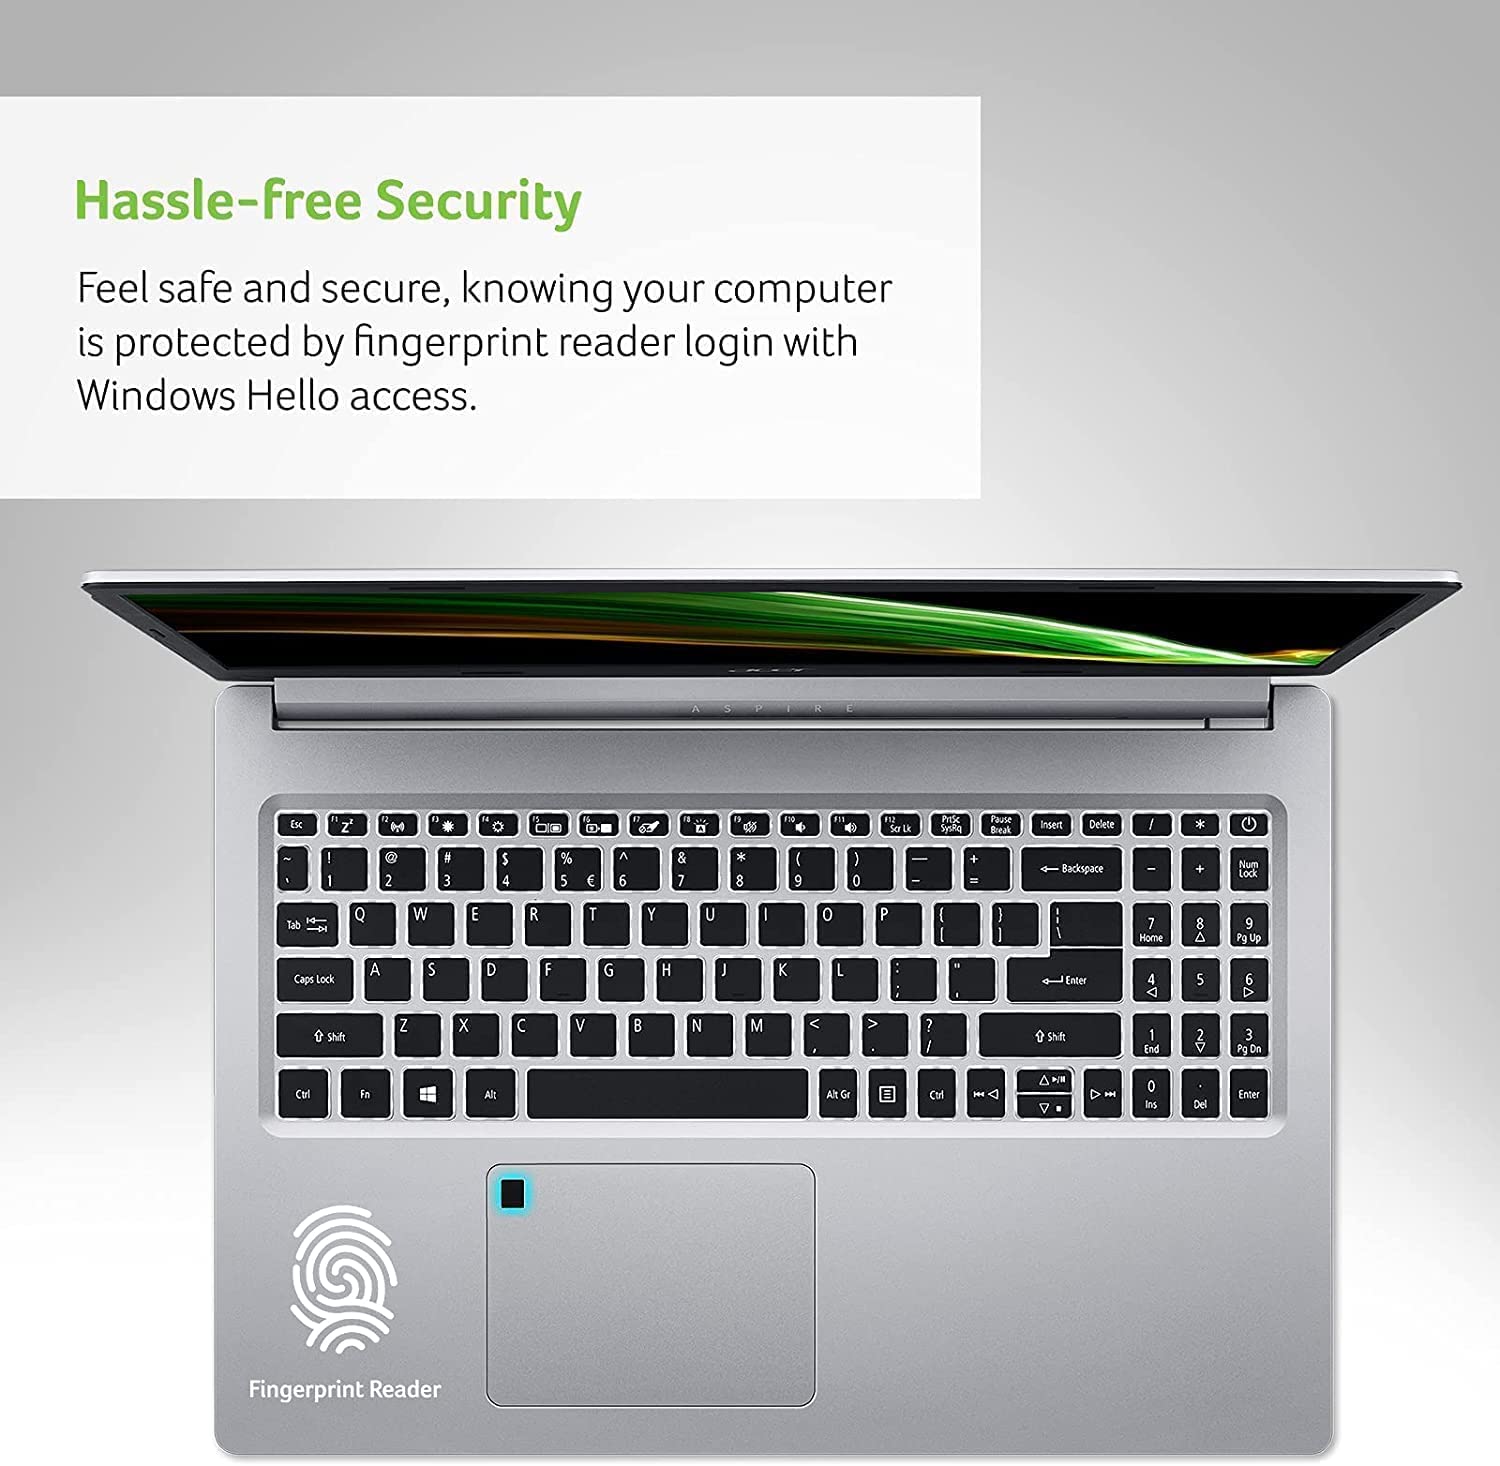 2023 Newest Acer Aspire 5 Slim Laptop | 15.6" FHD IPS | AMD Ryzen 7 3700U | 8GB RAM, 256GB SSD | WiFi 6 | Backlit Keyboard | Fingerprint Reader | Windows 11 Home - image 2 of 5